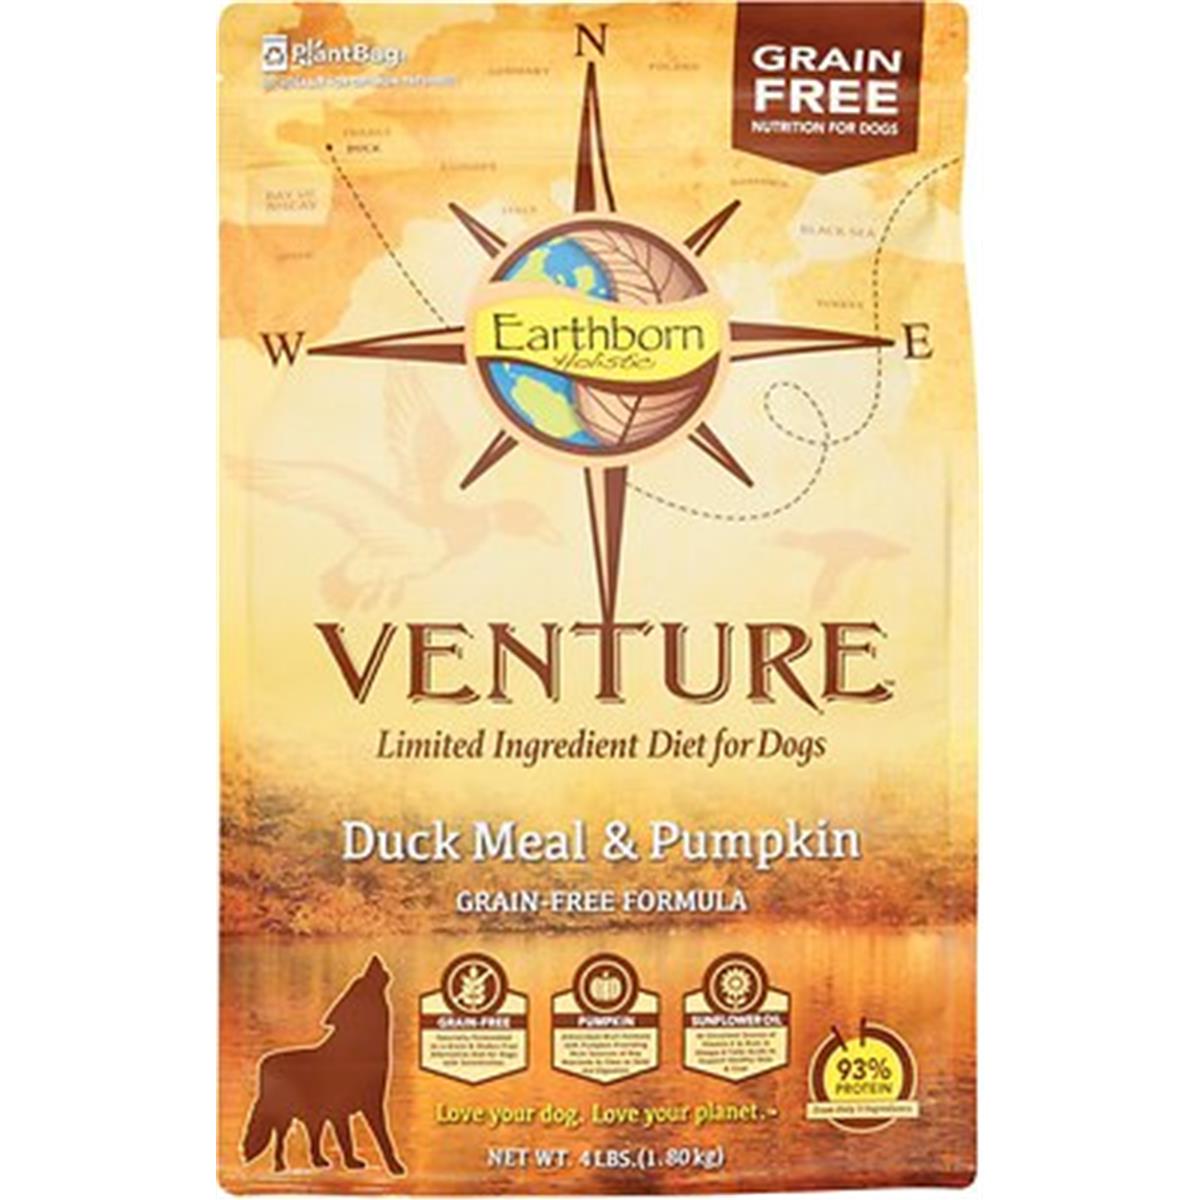 Pf57012 Venture Duck Meal & Pumpkin Grain-free Dry Dog Food - 4 Lbs